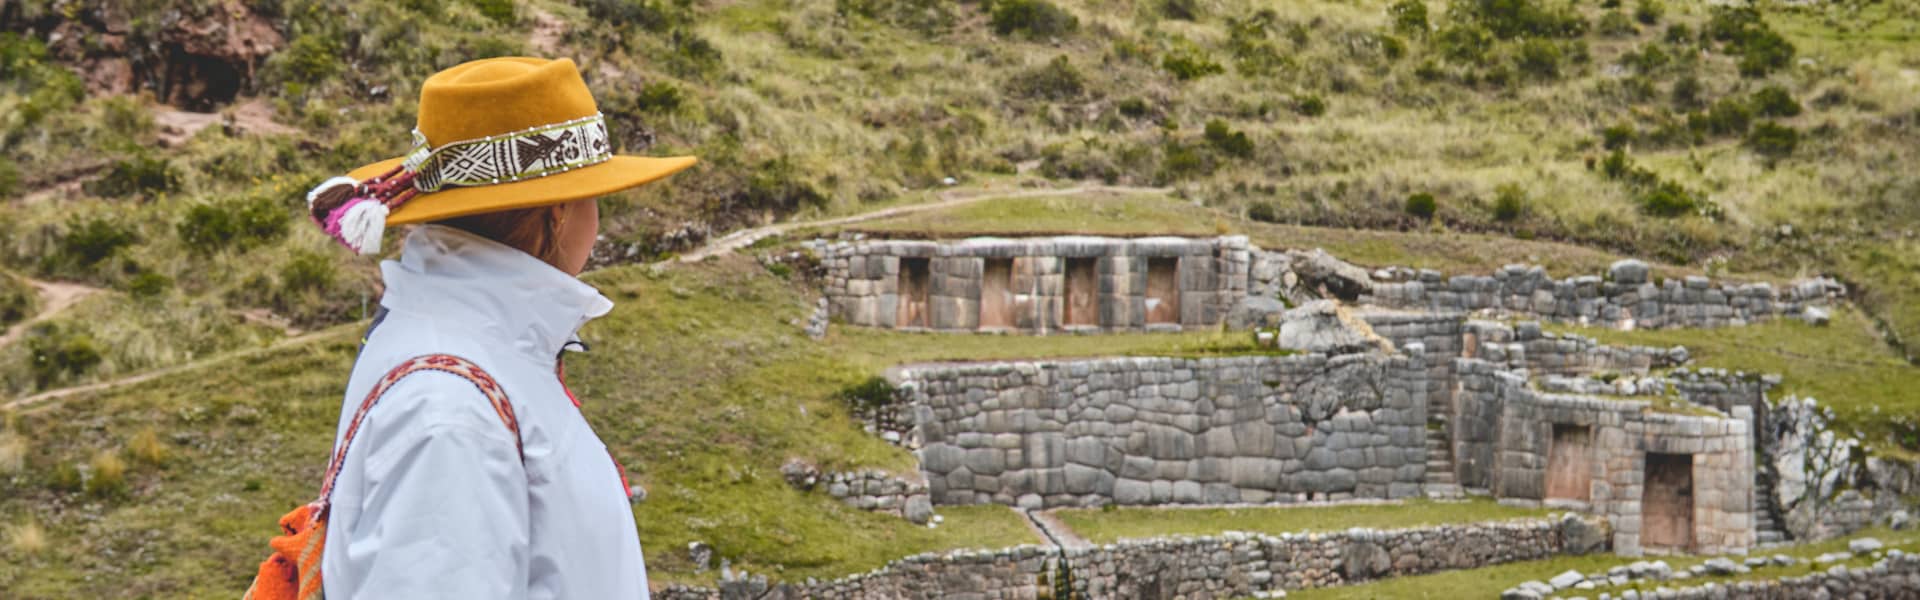 Tambomachay archaeological site - Cusco